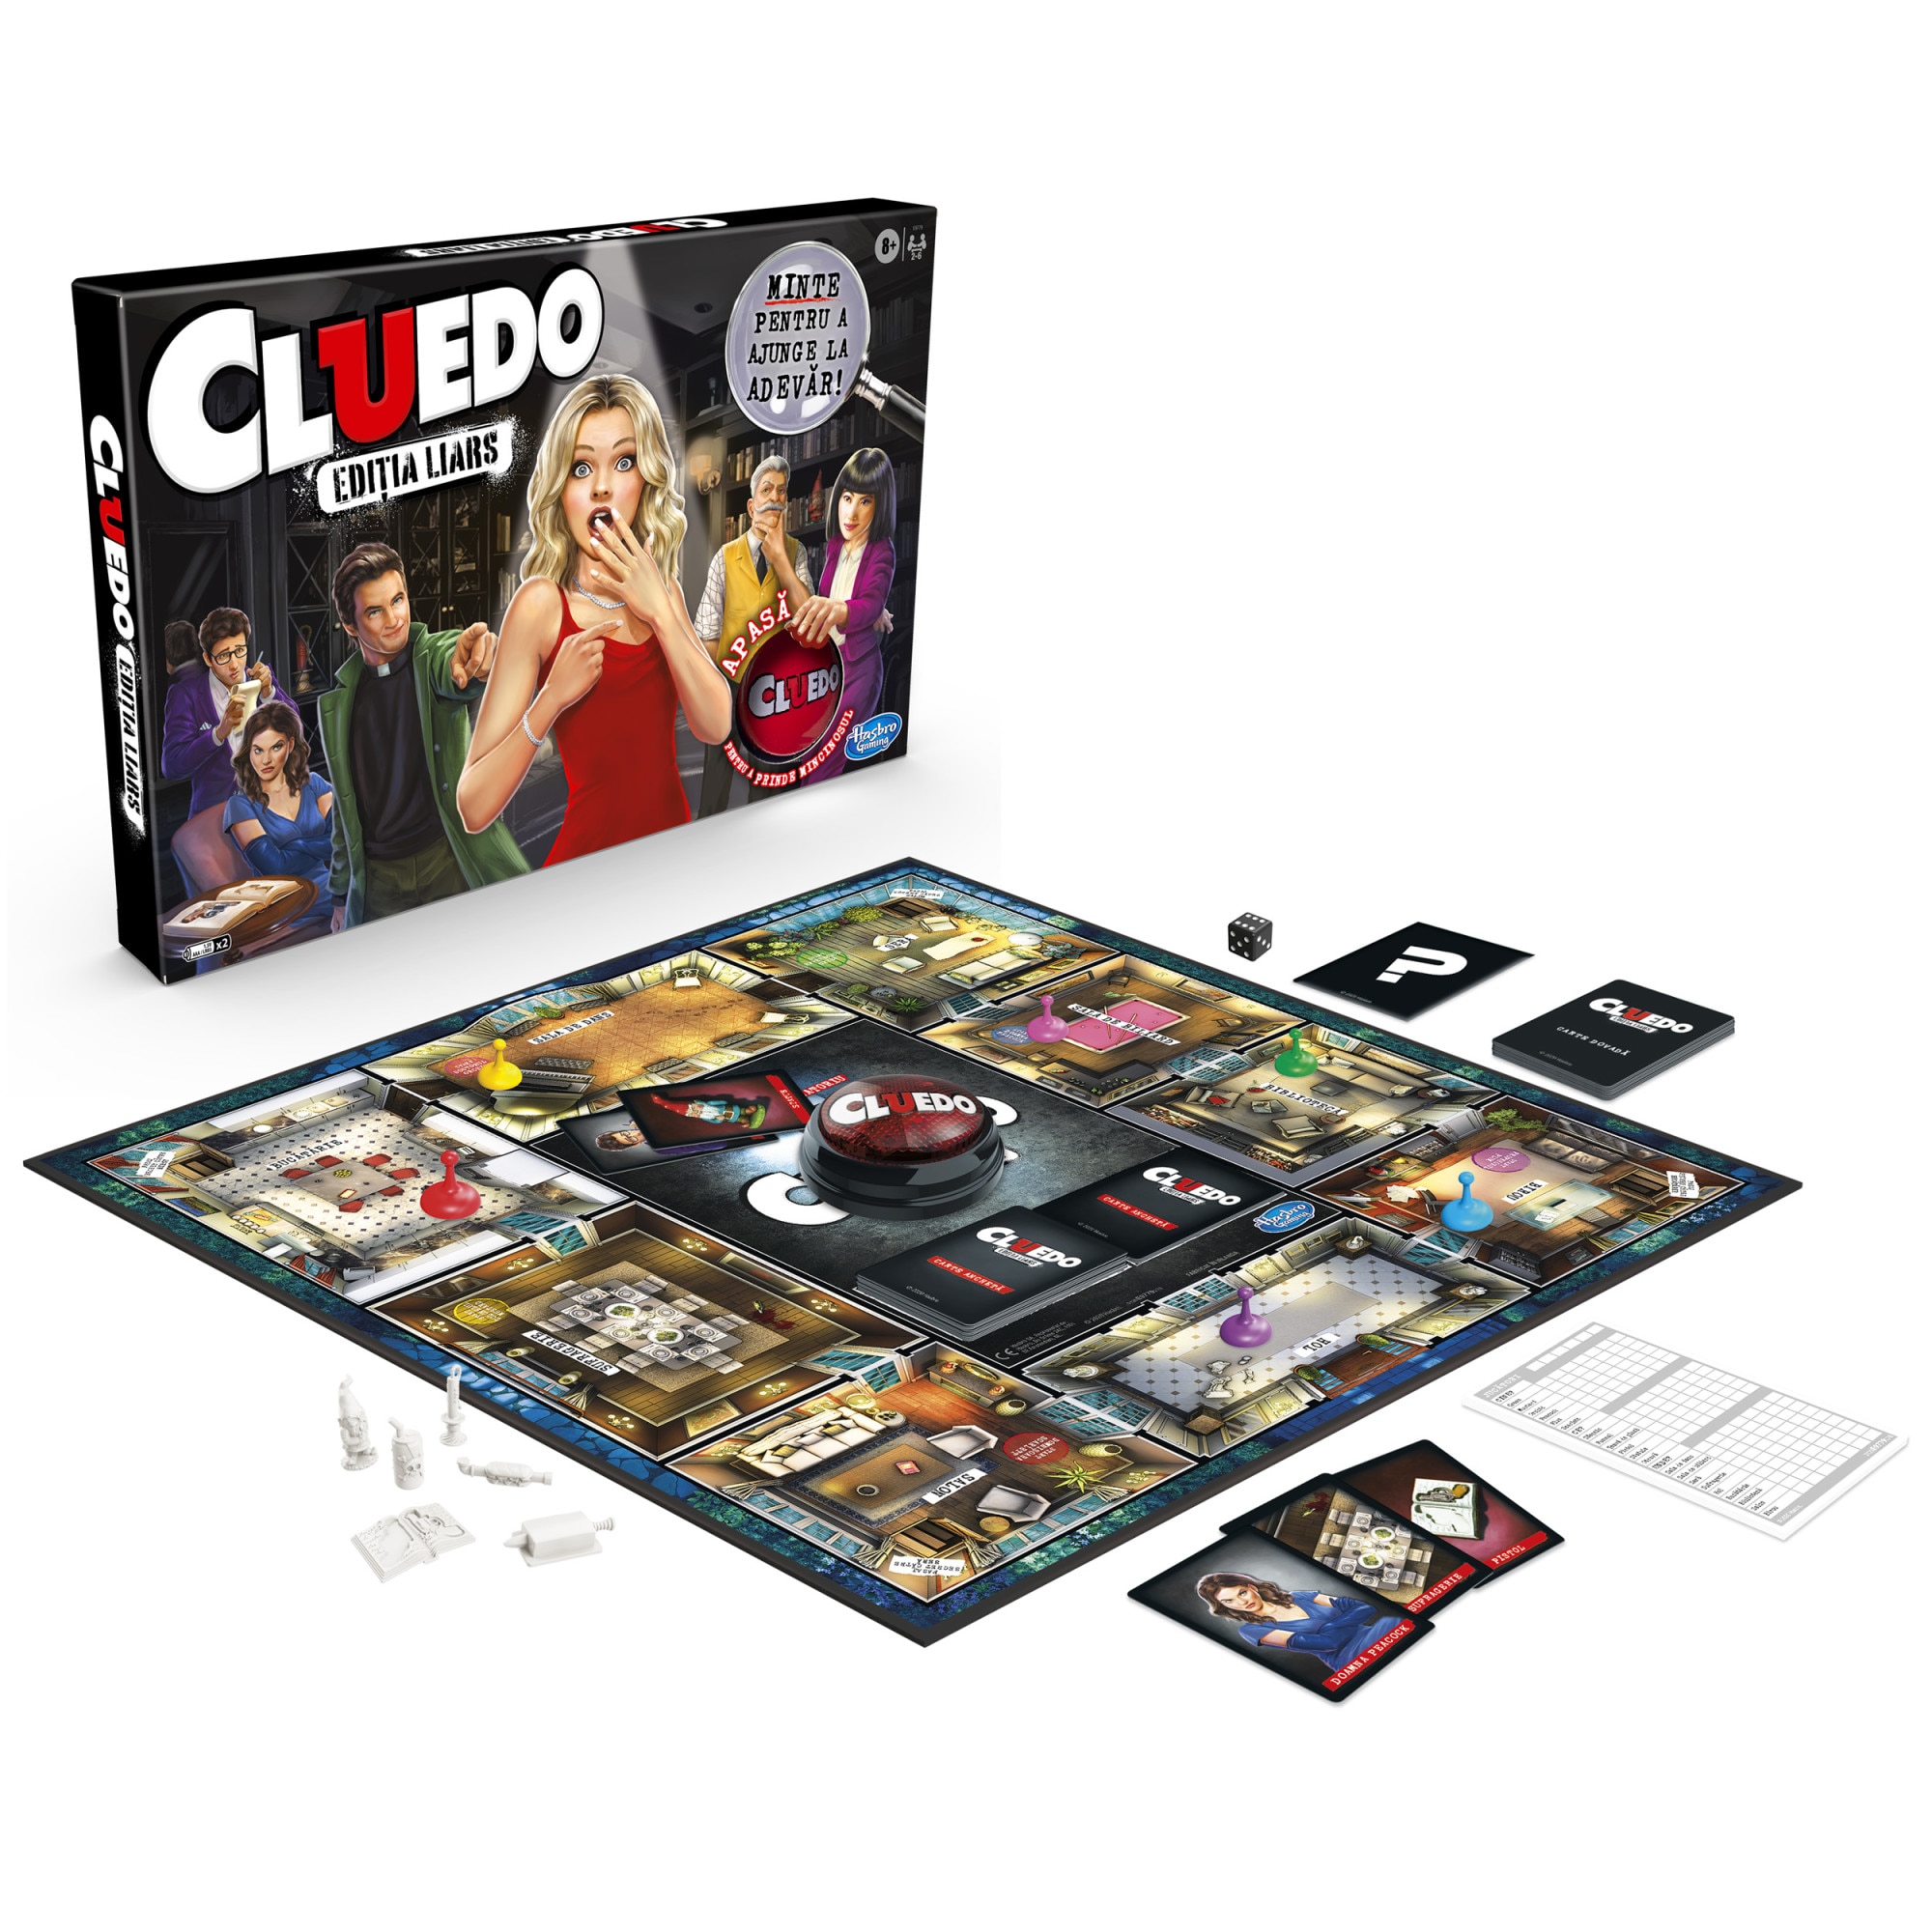 Joc - Cluedo - Editia Liars | Hasbro - 2